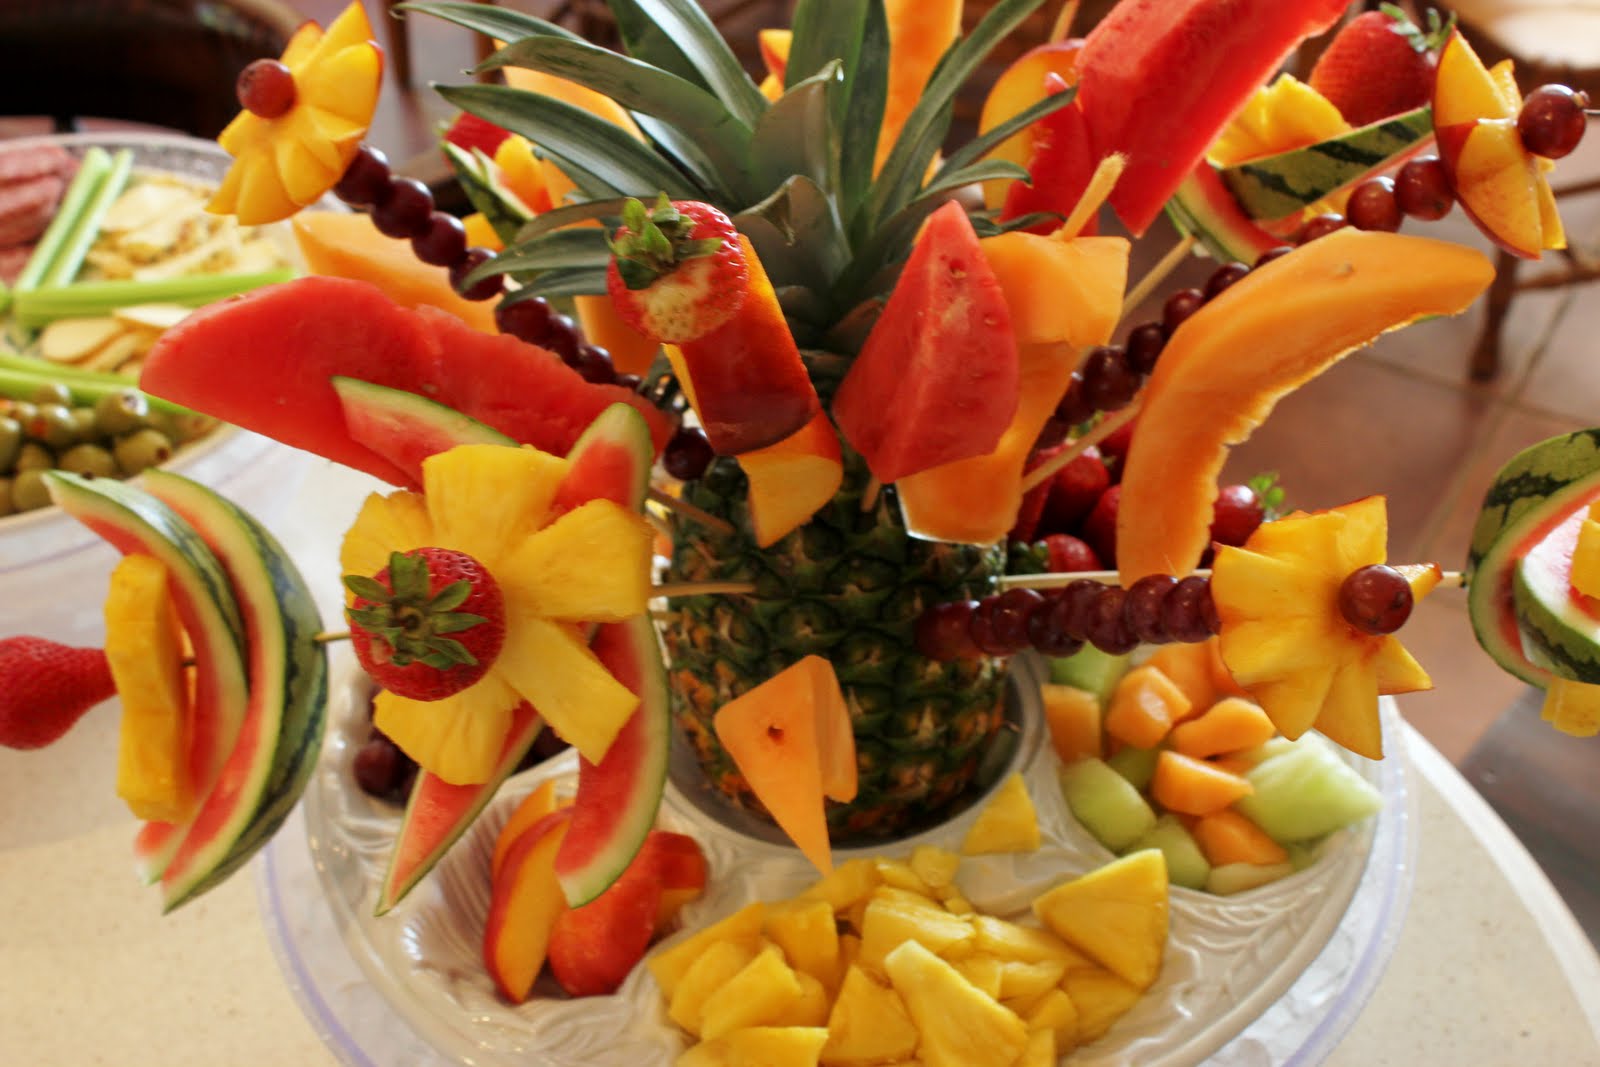 https://blogger.googleusercontent.com/img/b/R29vZ2xl/AVvXsEgw9NqRBjng3JnHk18nknHLEjqk7zElPI7n77EkaESa056hoIDOUmjQddtjPLJj8mu3oj22CHE6s3AaXjgOYzVNW18Lp4PrlQ49FwWv0RFnUZKLy4EKWmB1gqGYUG4ULjBJ-N-RScKfHM9F/s1600/Fruit+Tray+Appetiser+Fruit+Art+Fruit+Flowers+Decorating.jpg